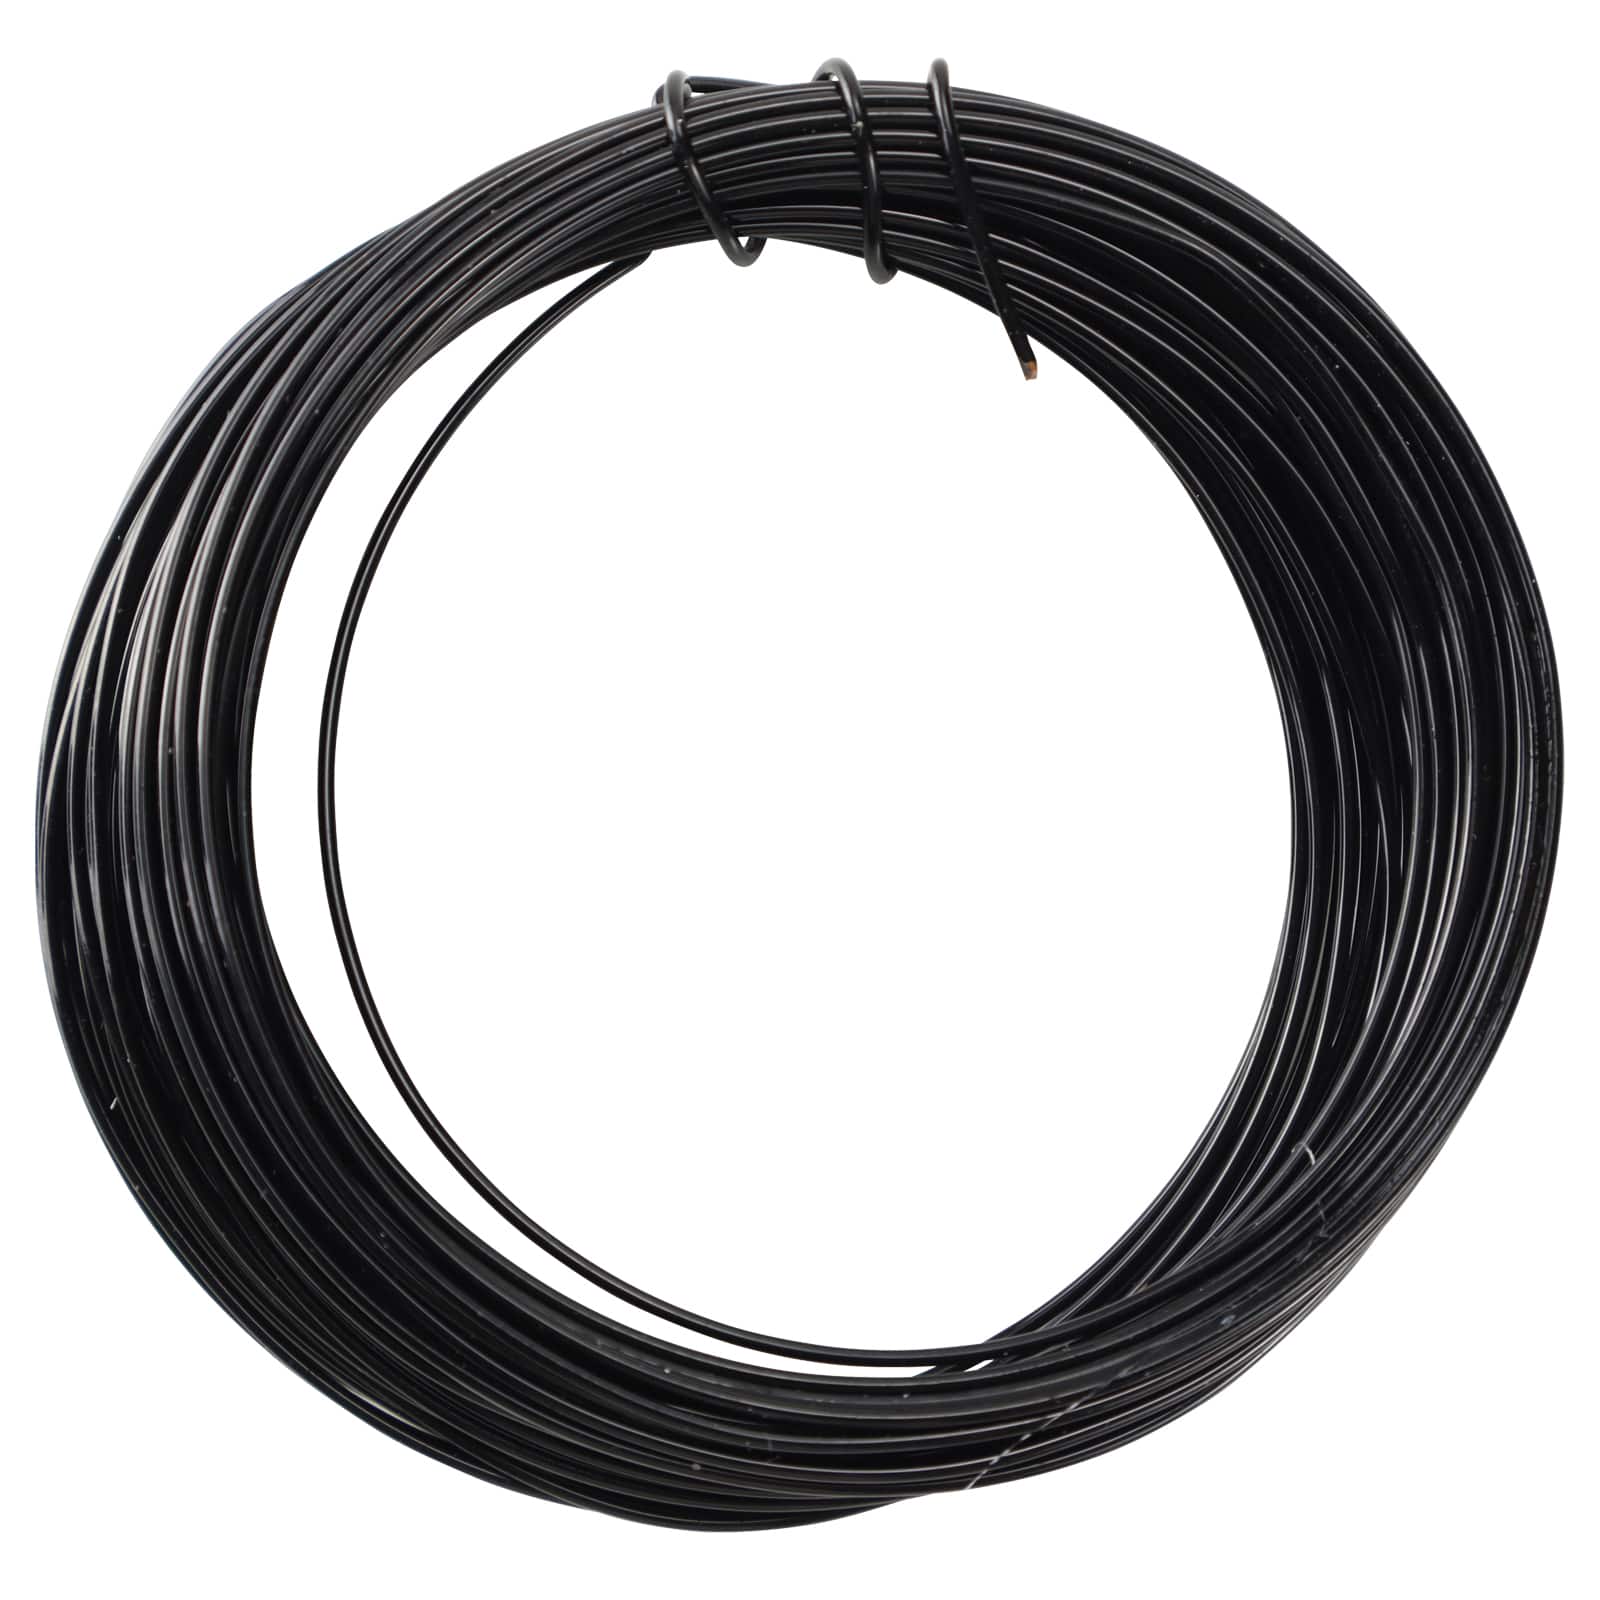 20 Gauge Black Artistic Wire - 15 Yards, BDC-804.02